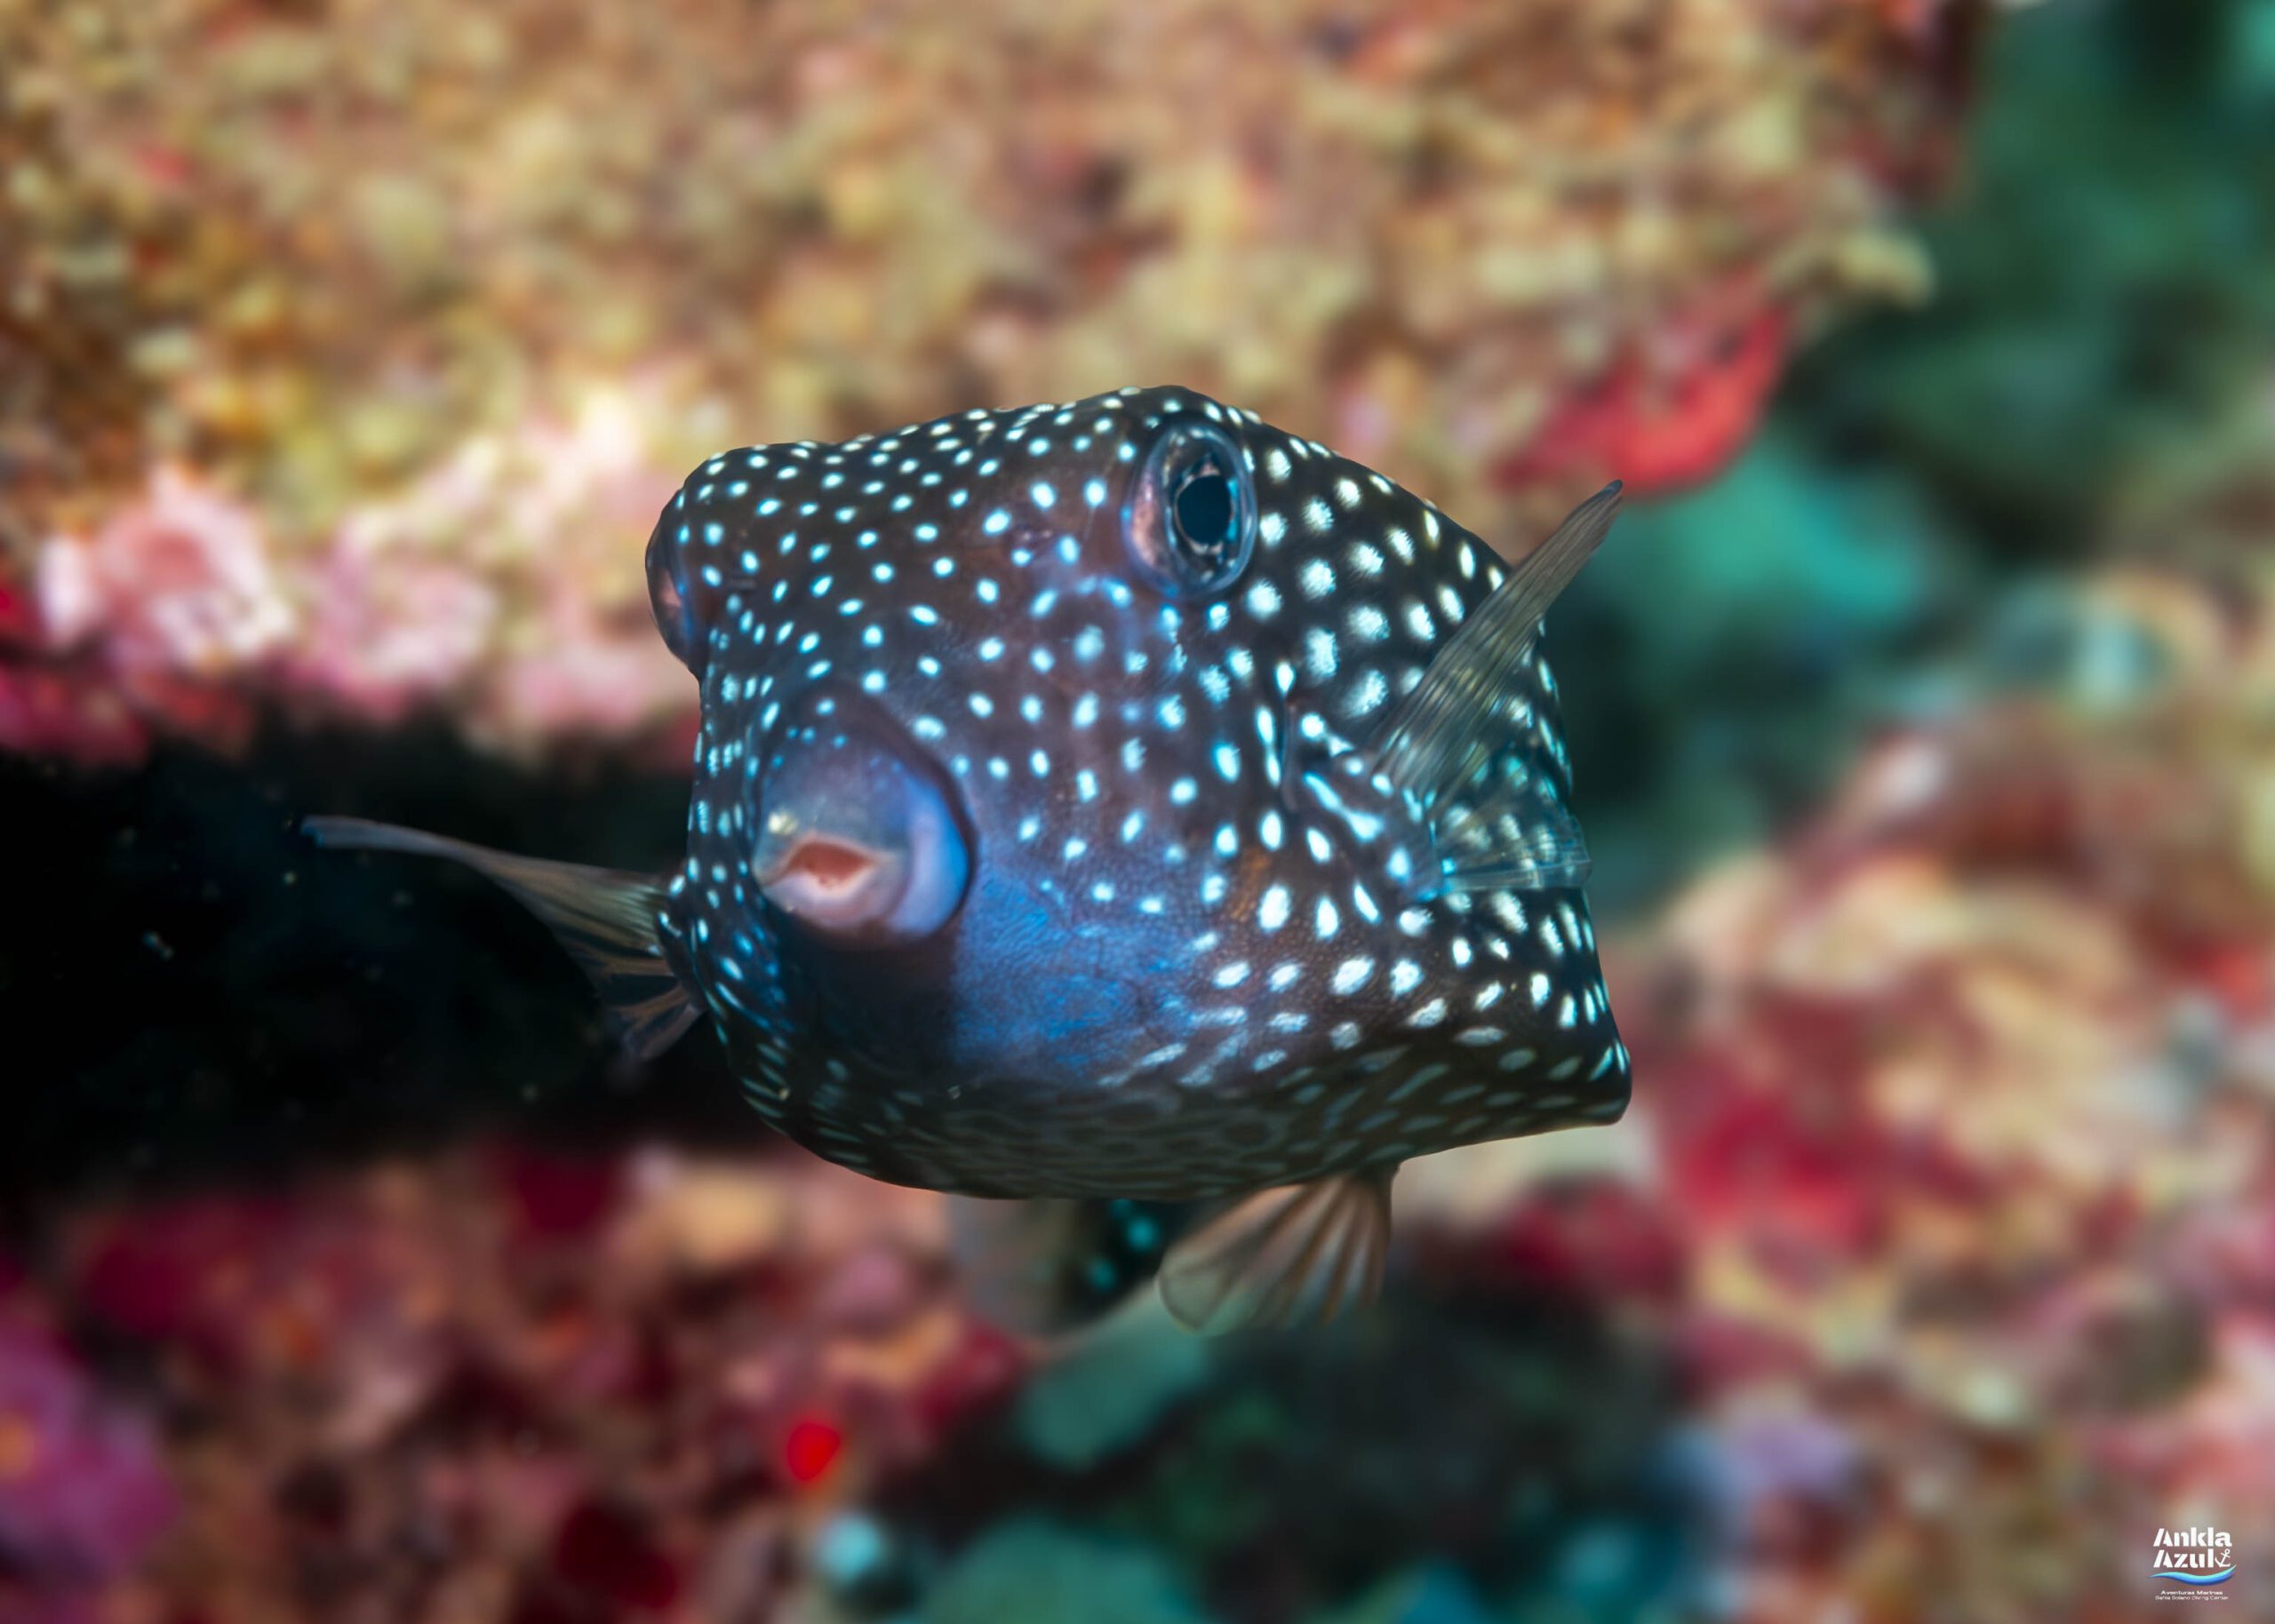 photo Spotted boxfish | Ankla Azul